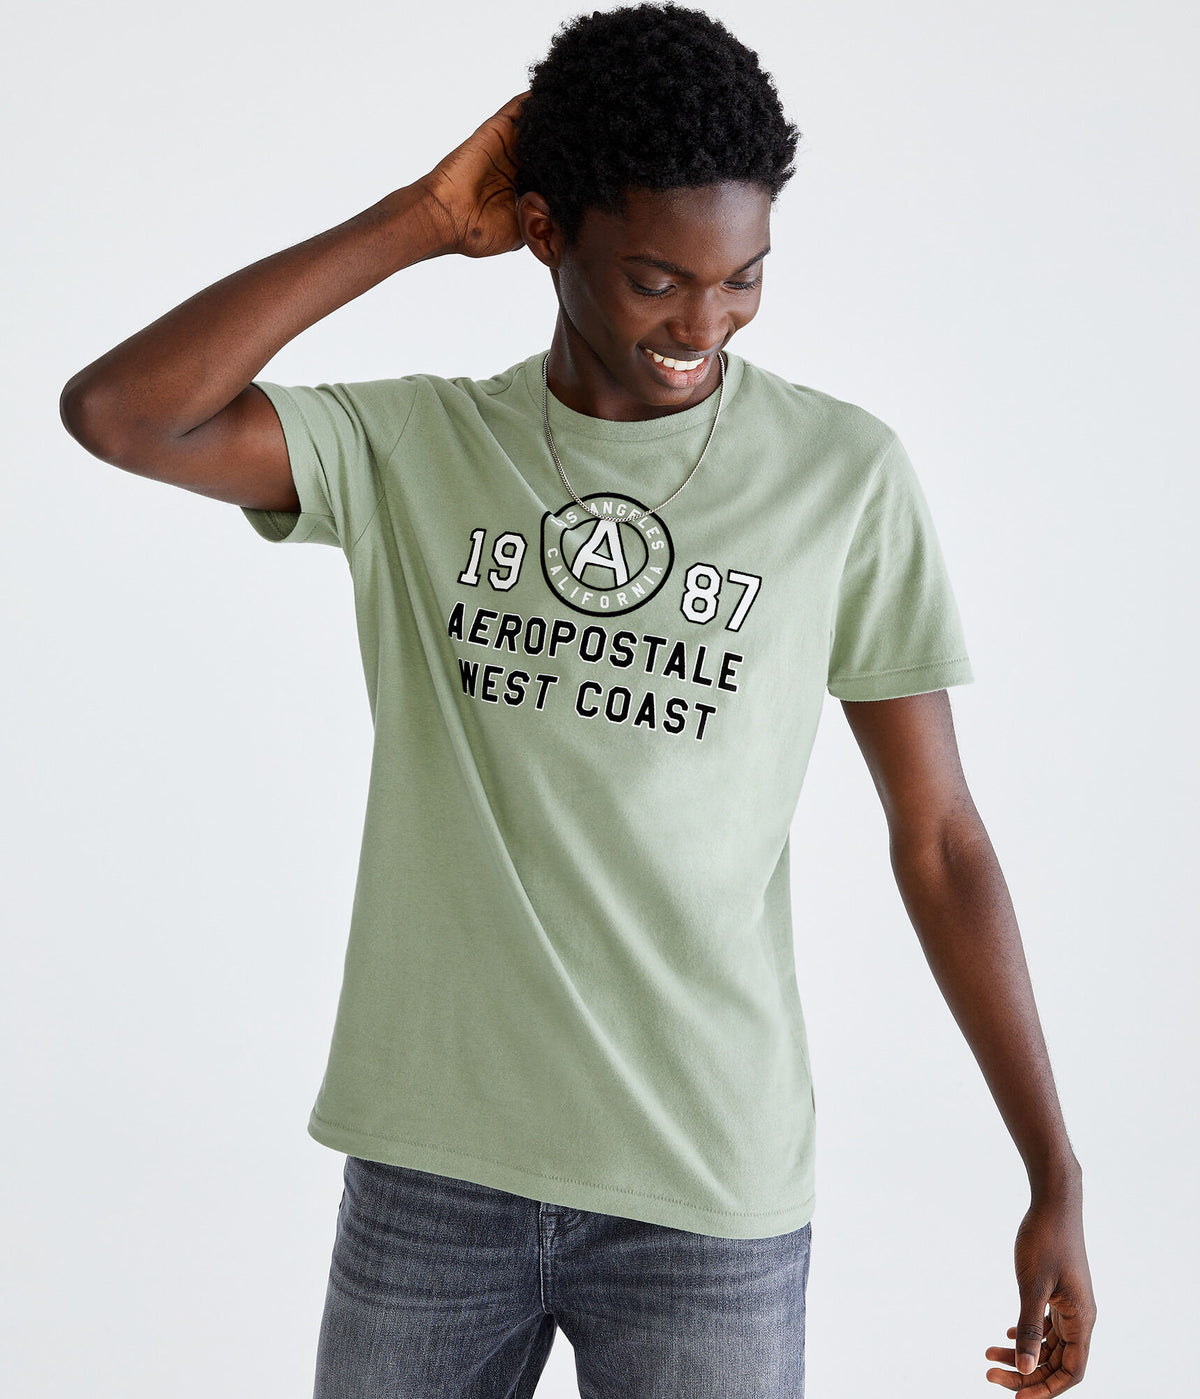 Aeropostale Mens' Aeropostale West Coast Applique Graphic Tee - Green - Size XS - Cotton - Teen Fashion & Clothing Hedge Green